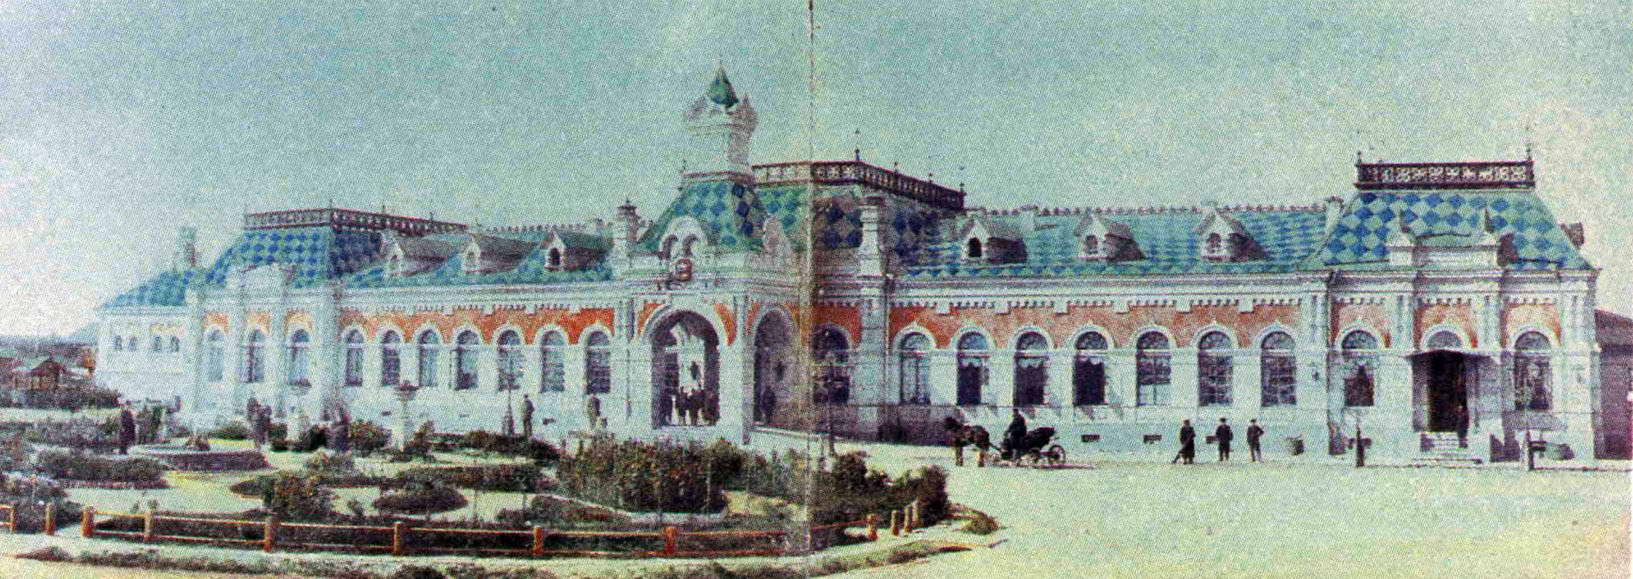 Станция Екатеринбург